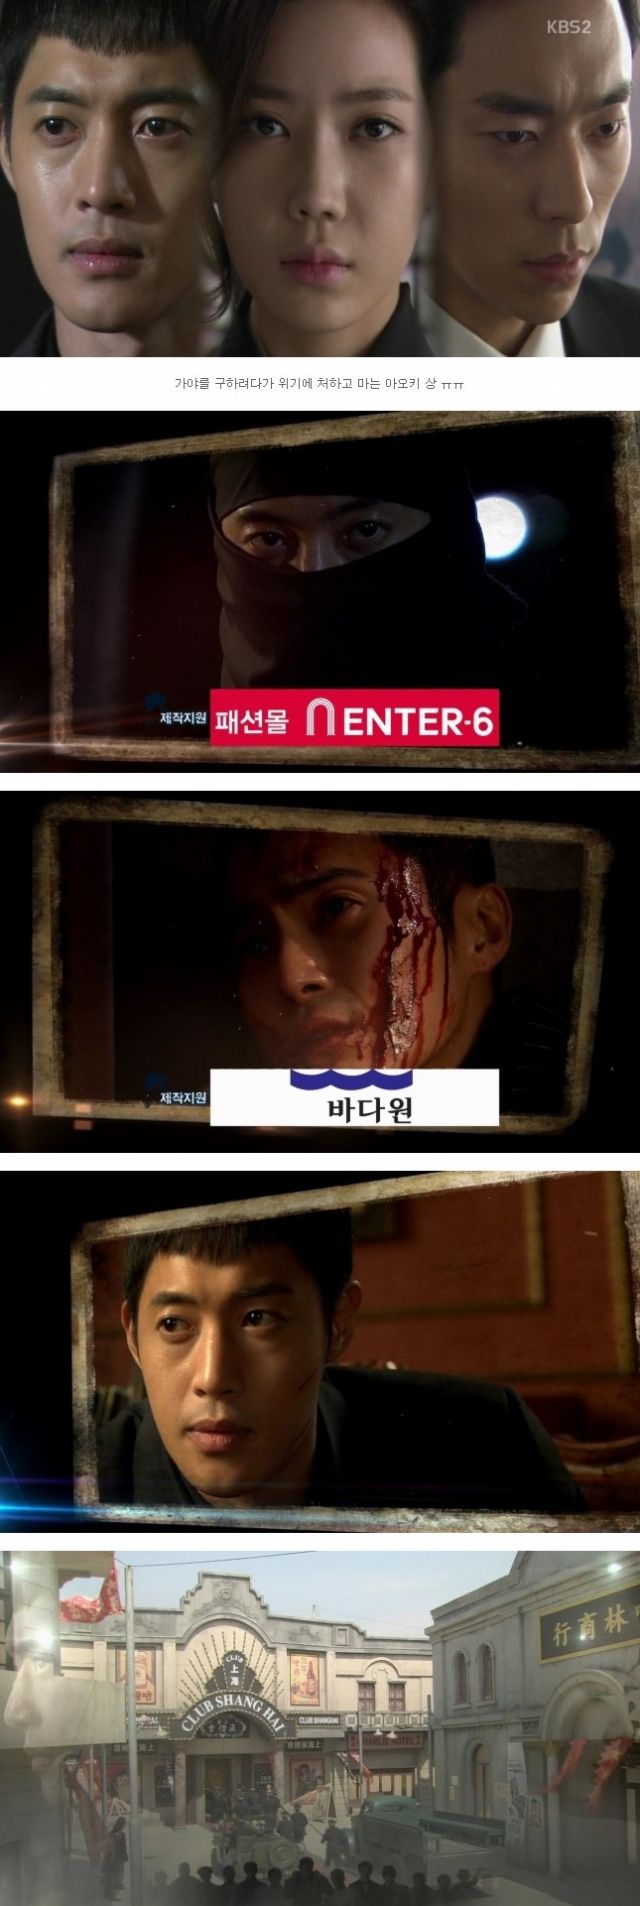 episode 22 captures for the Korean drama 'Inspiring Generation'